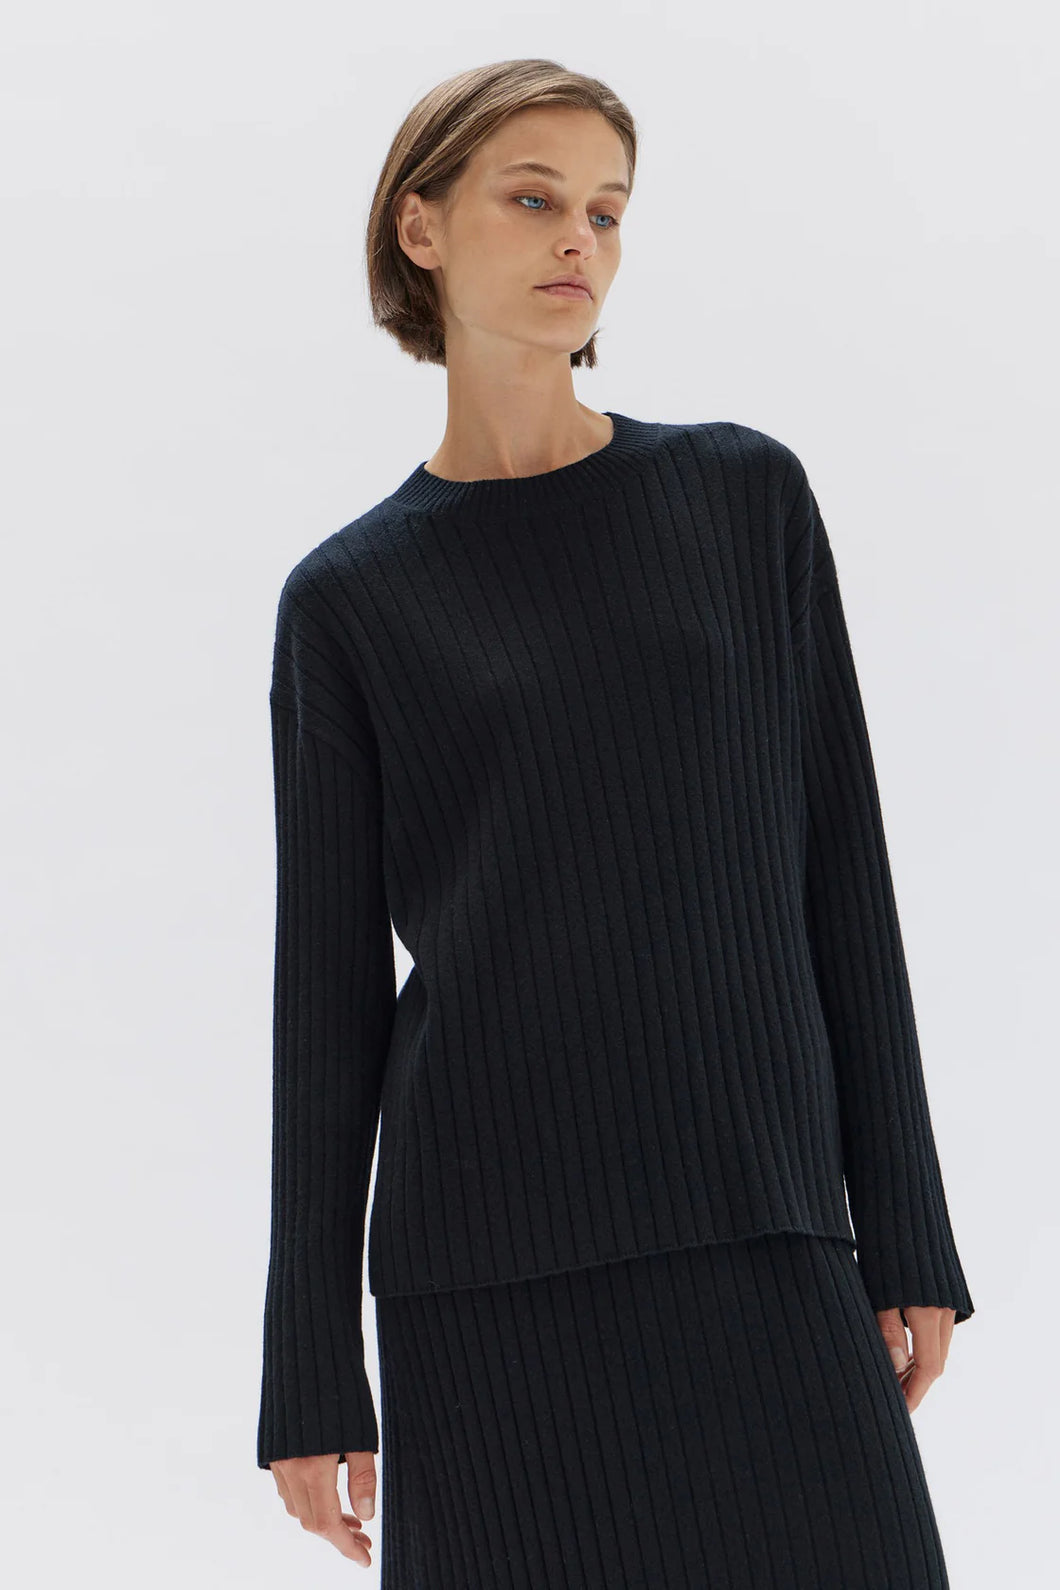 Wool Cashmere Rib Long Sleeve Top | Black